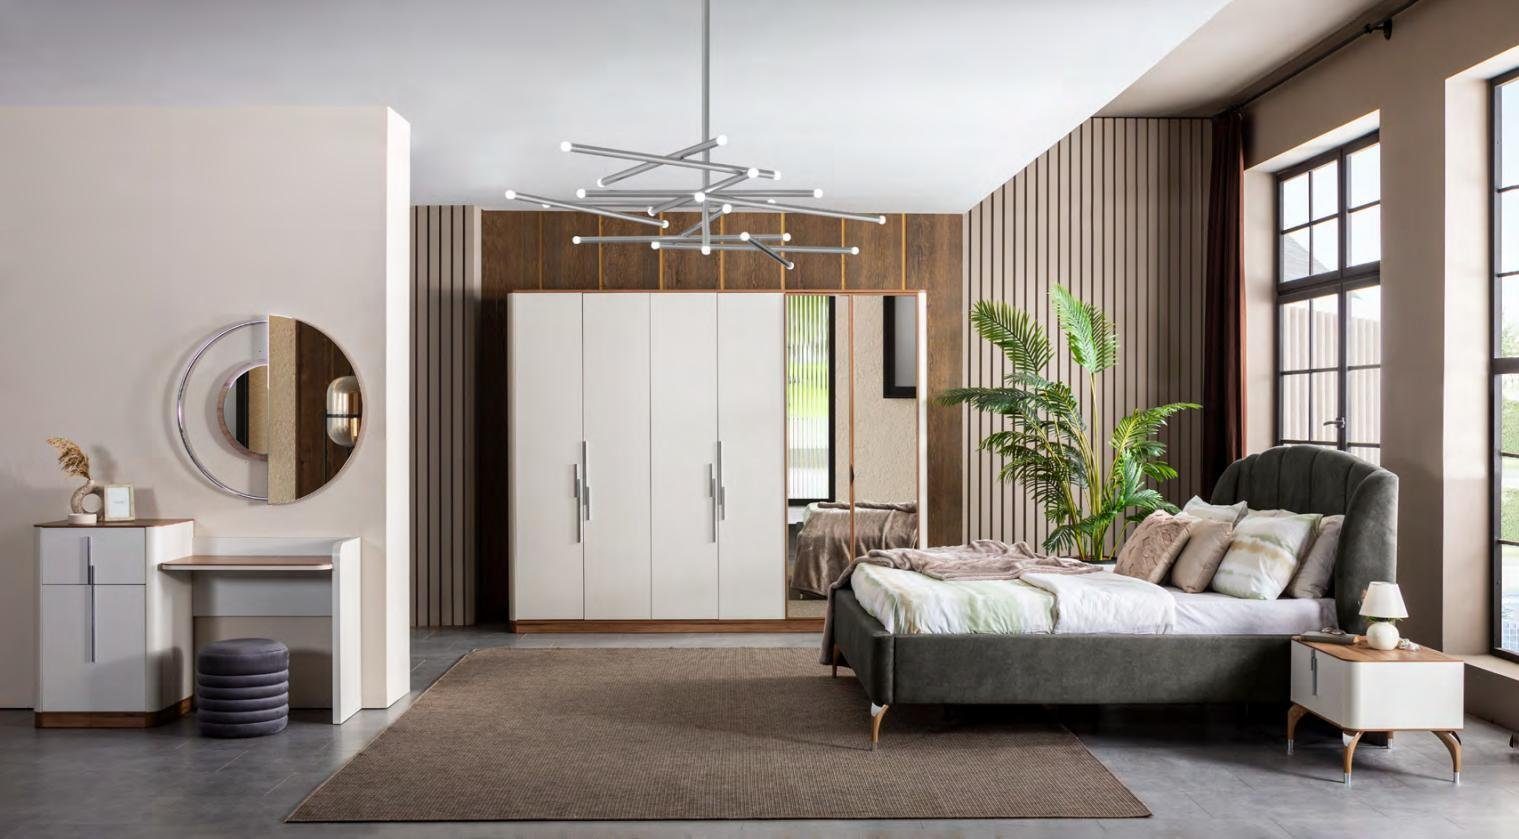 In Luxus Bettgestell Design Bett Doppelbetten JVmoebel Europe (Bett), Modern Made Grau Bettrahmen Bett